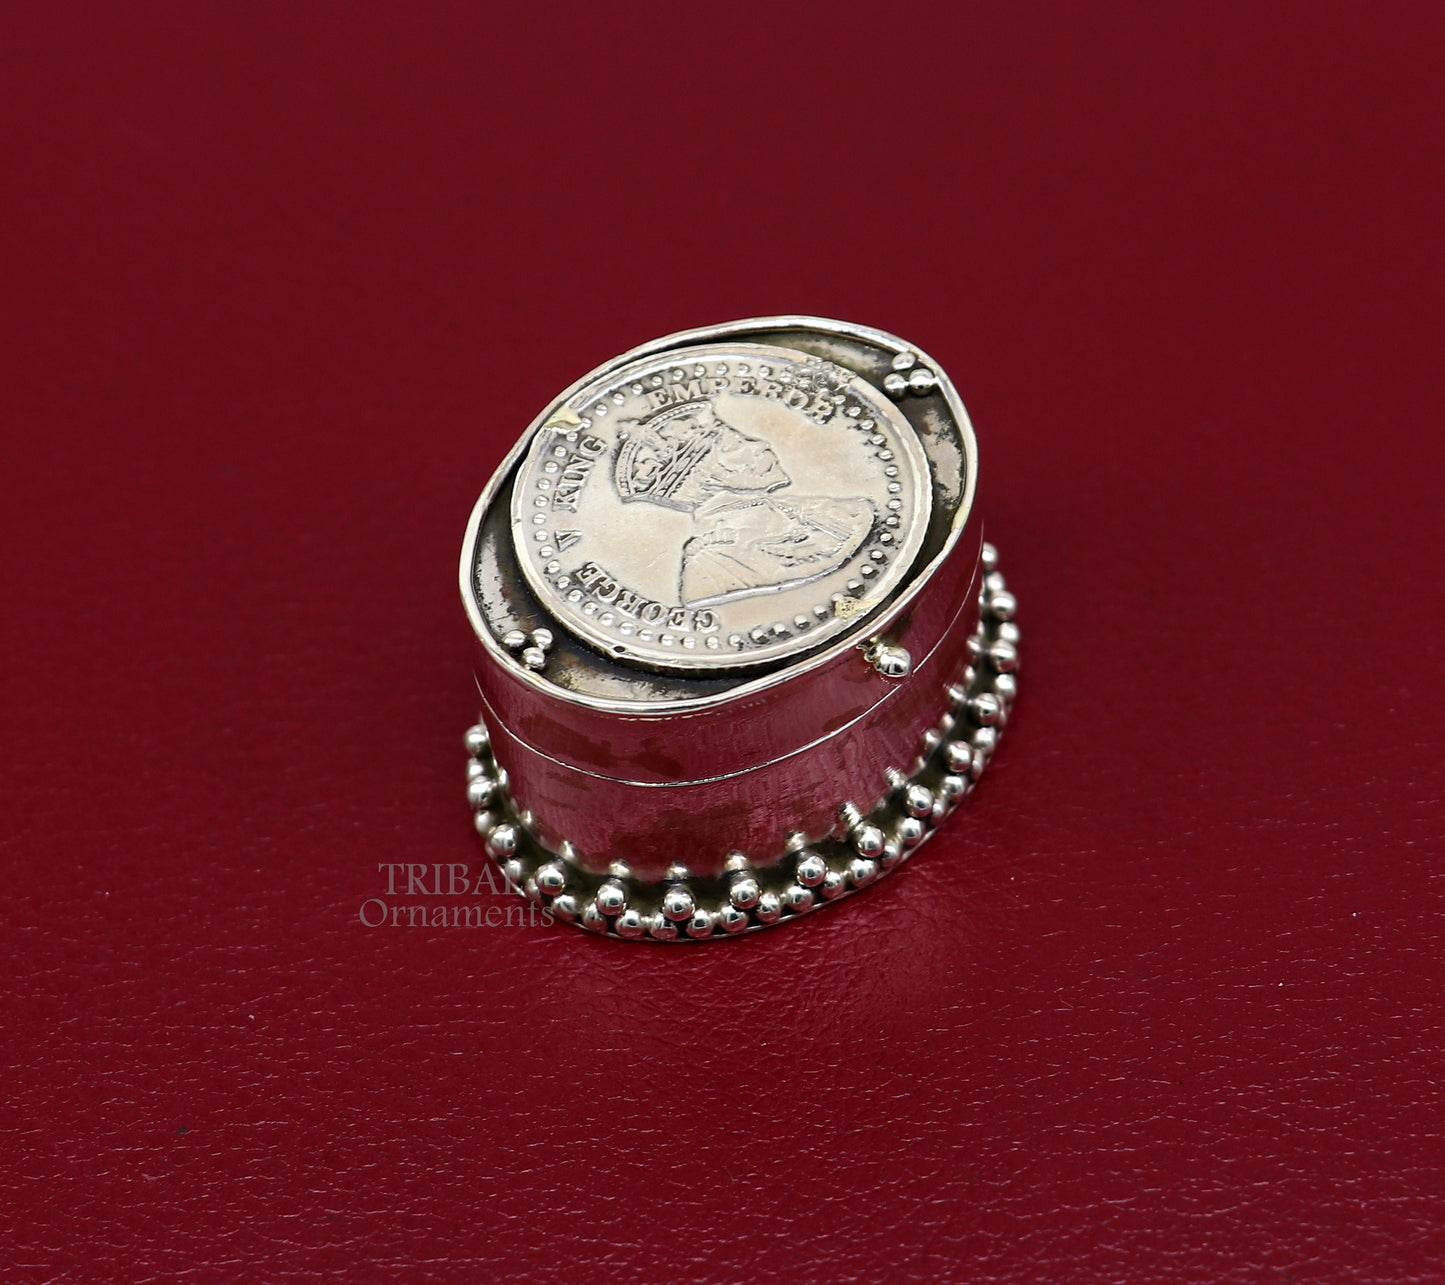 925 sterling silver unique design George v king emperor coin trinket box, kajal eyeliner box, Sindur box brides gift silver box stb763 - TRIBAL ORNAMENTS